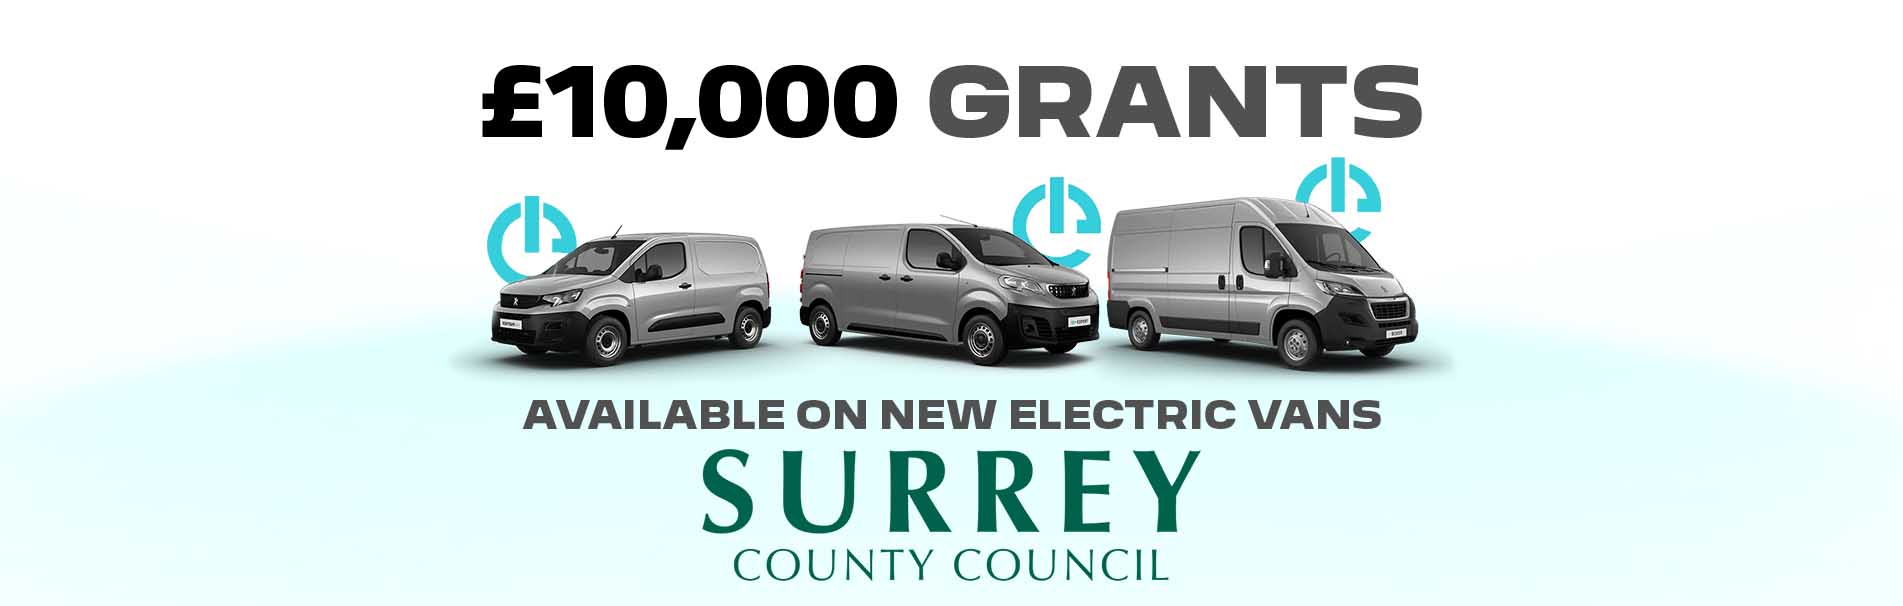 surrey-county-council-guildford-grants-on-new-electric-vans-sli